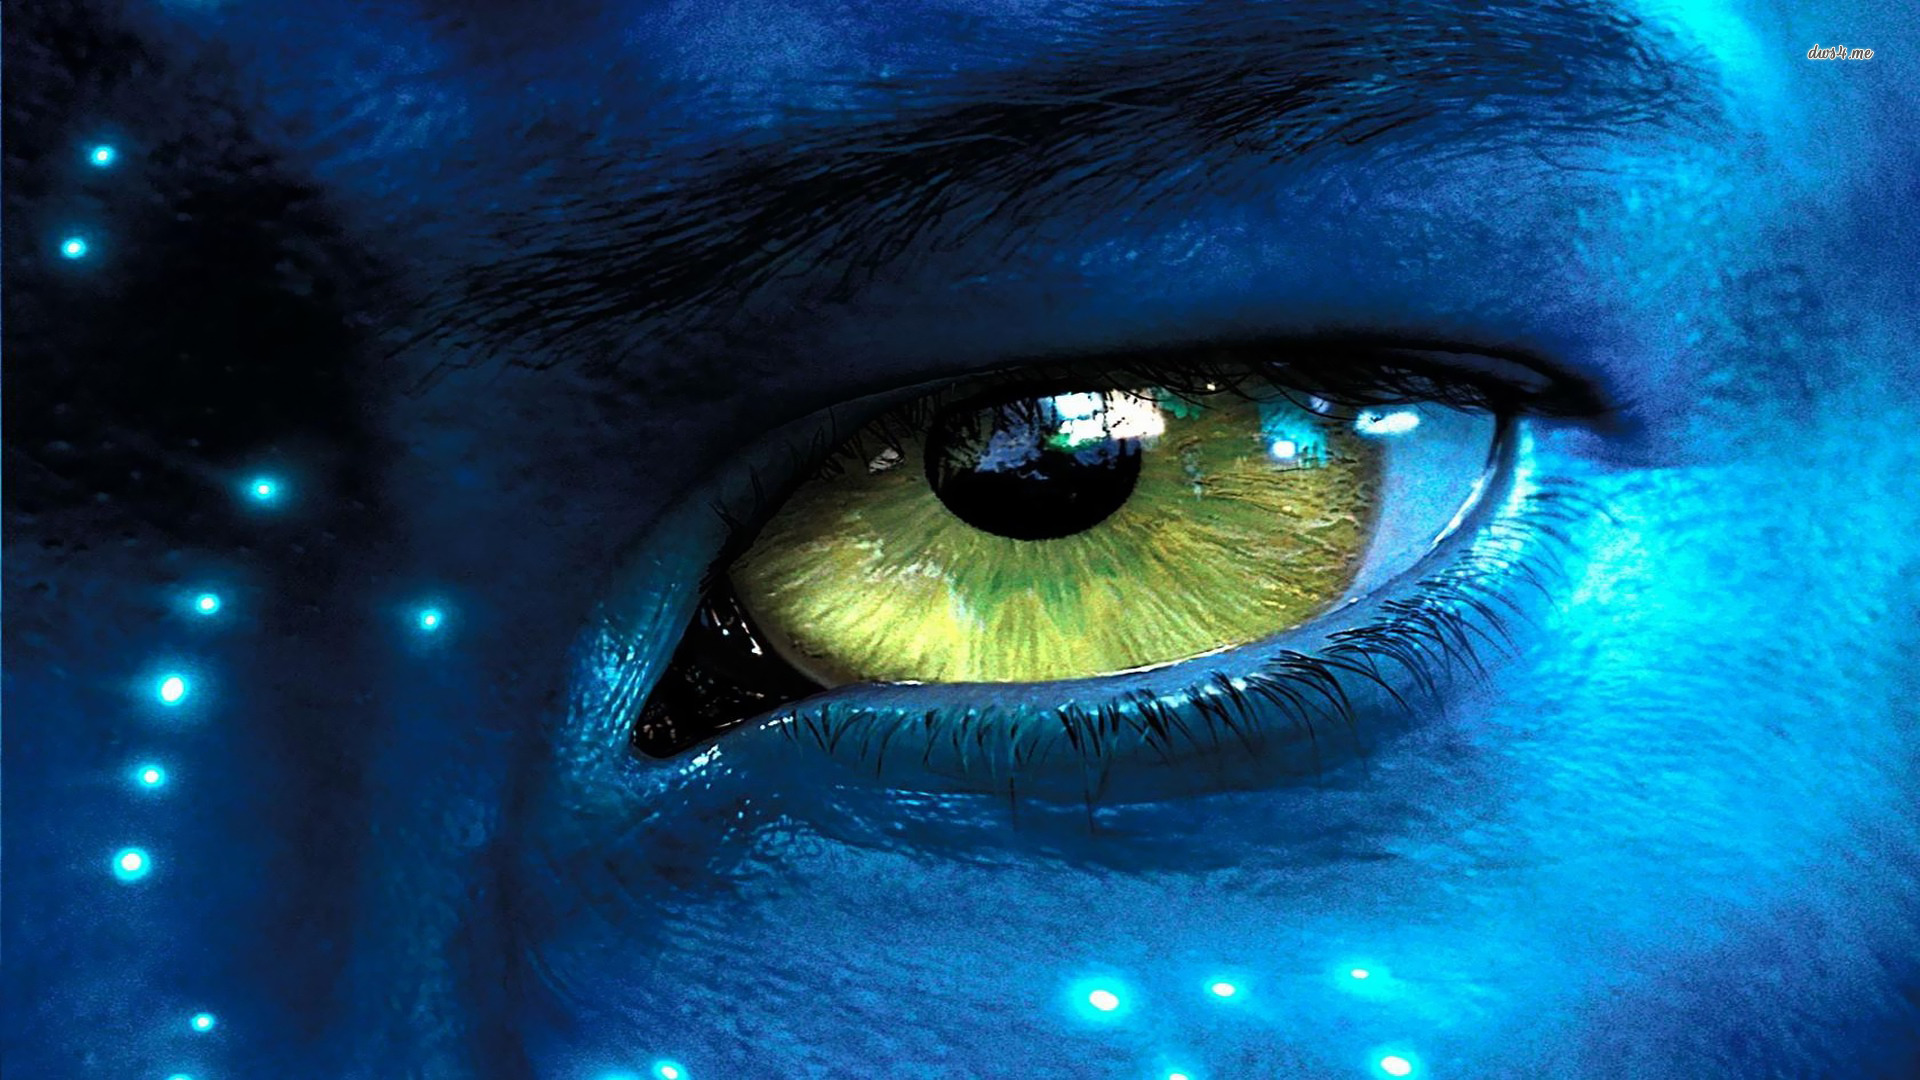 Avatar Eye Wallpaper, Size: 1920x1080 | AmazingPict.com - HD ...